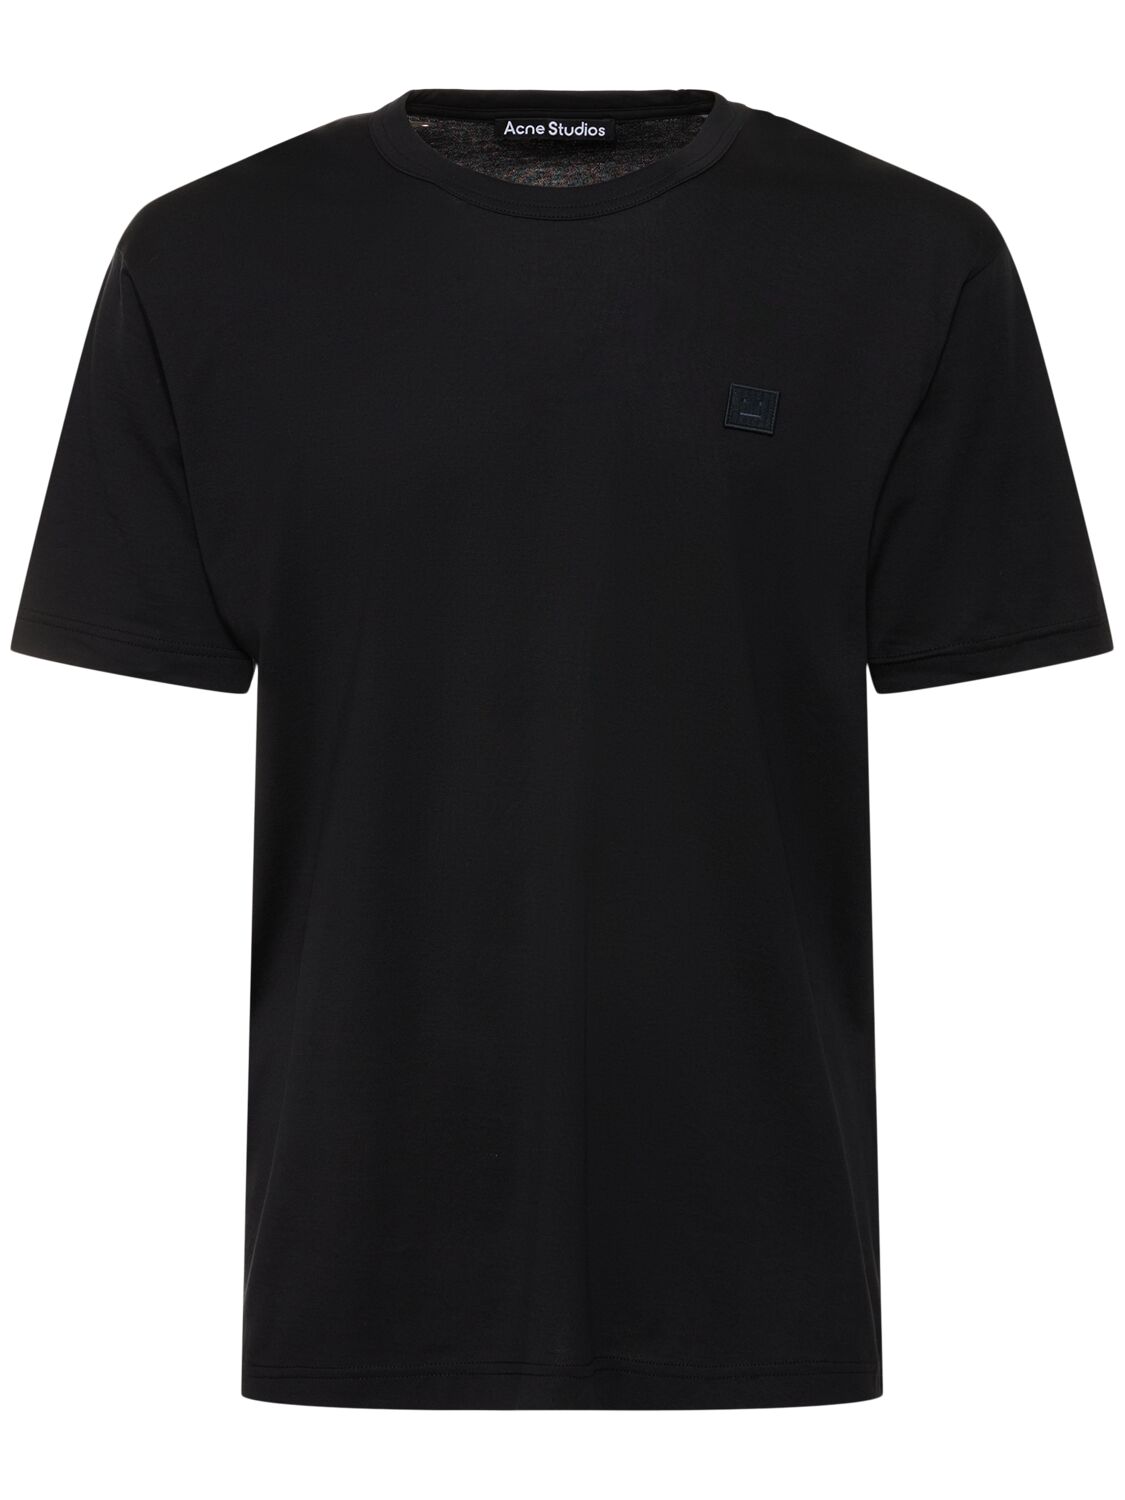 Acne Studios Nace Face Patch Cotton T-shirt In Black